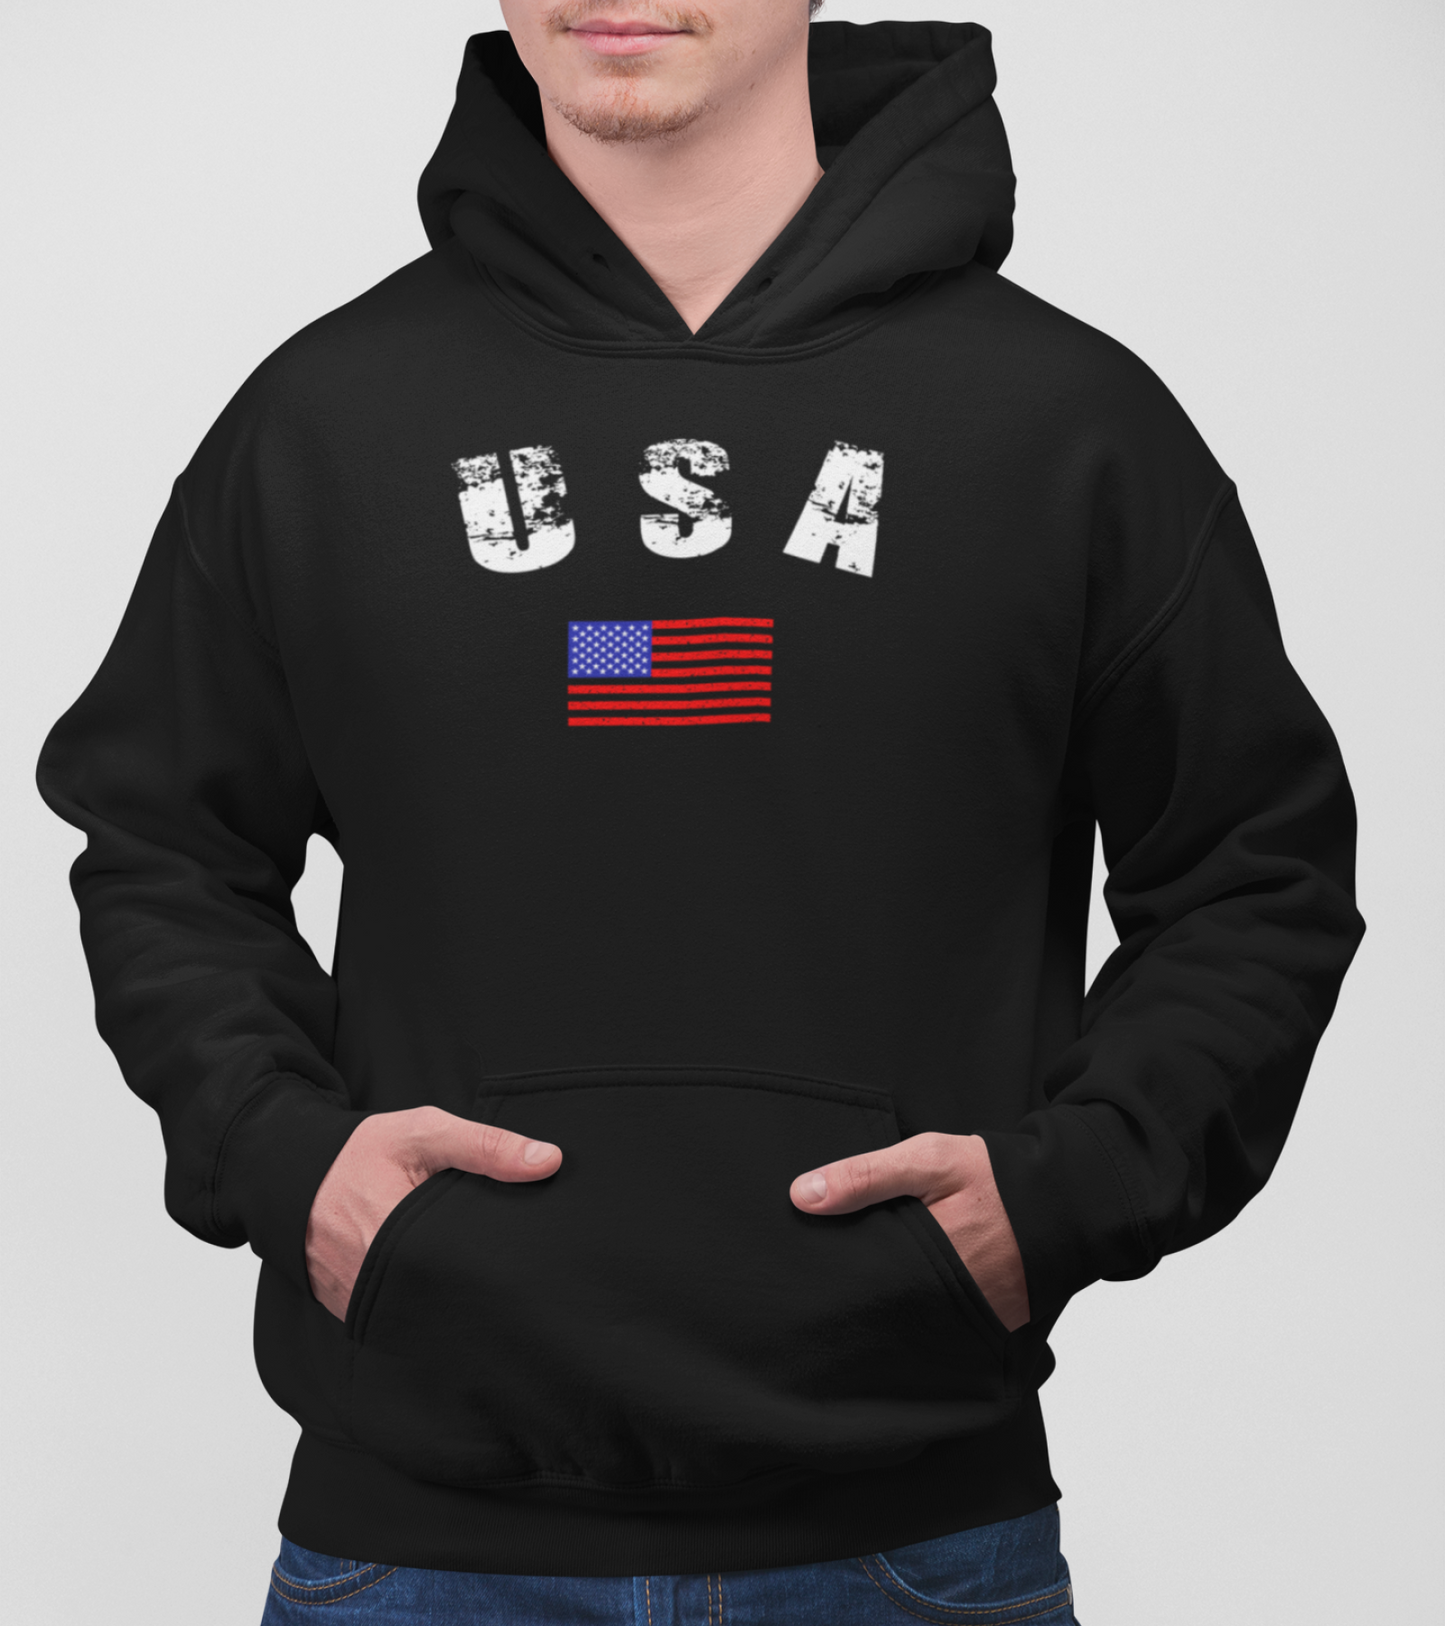 USA Flag Logo (White) Pullover Hoodie - Unisex